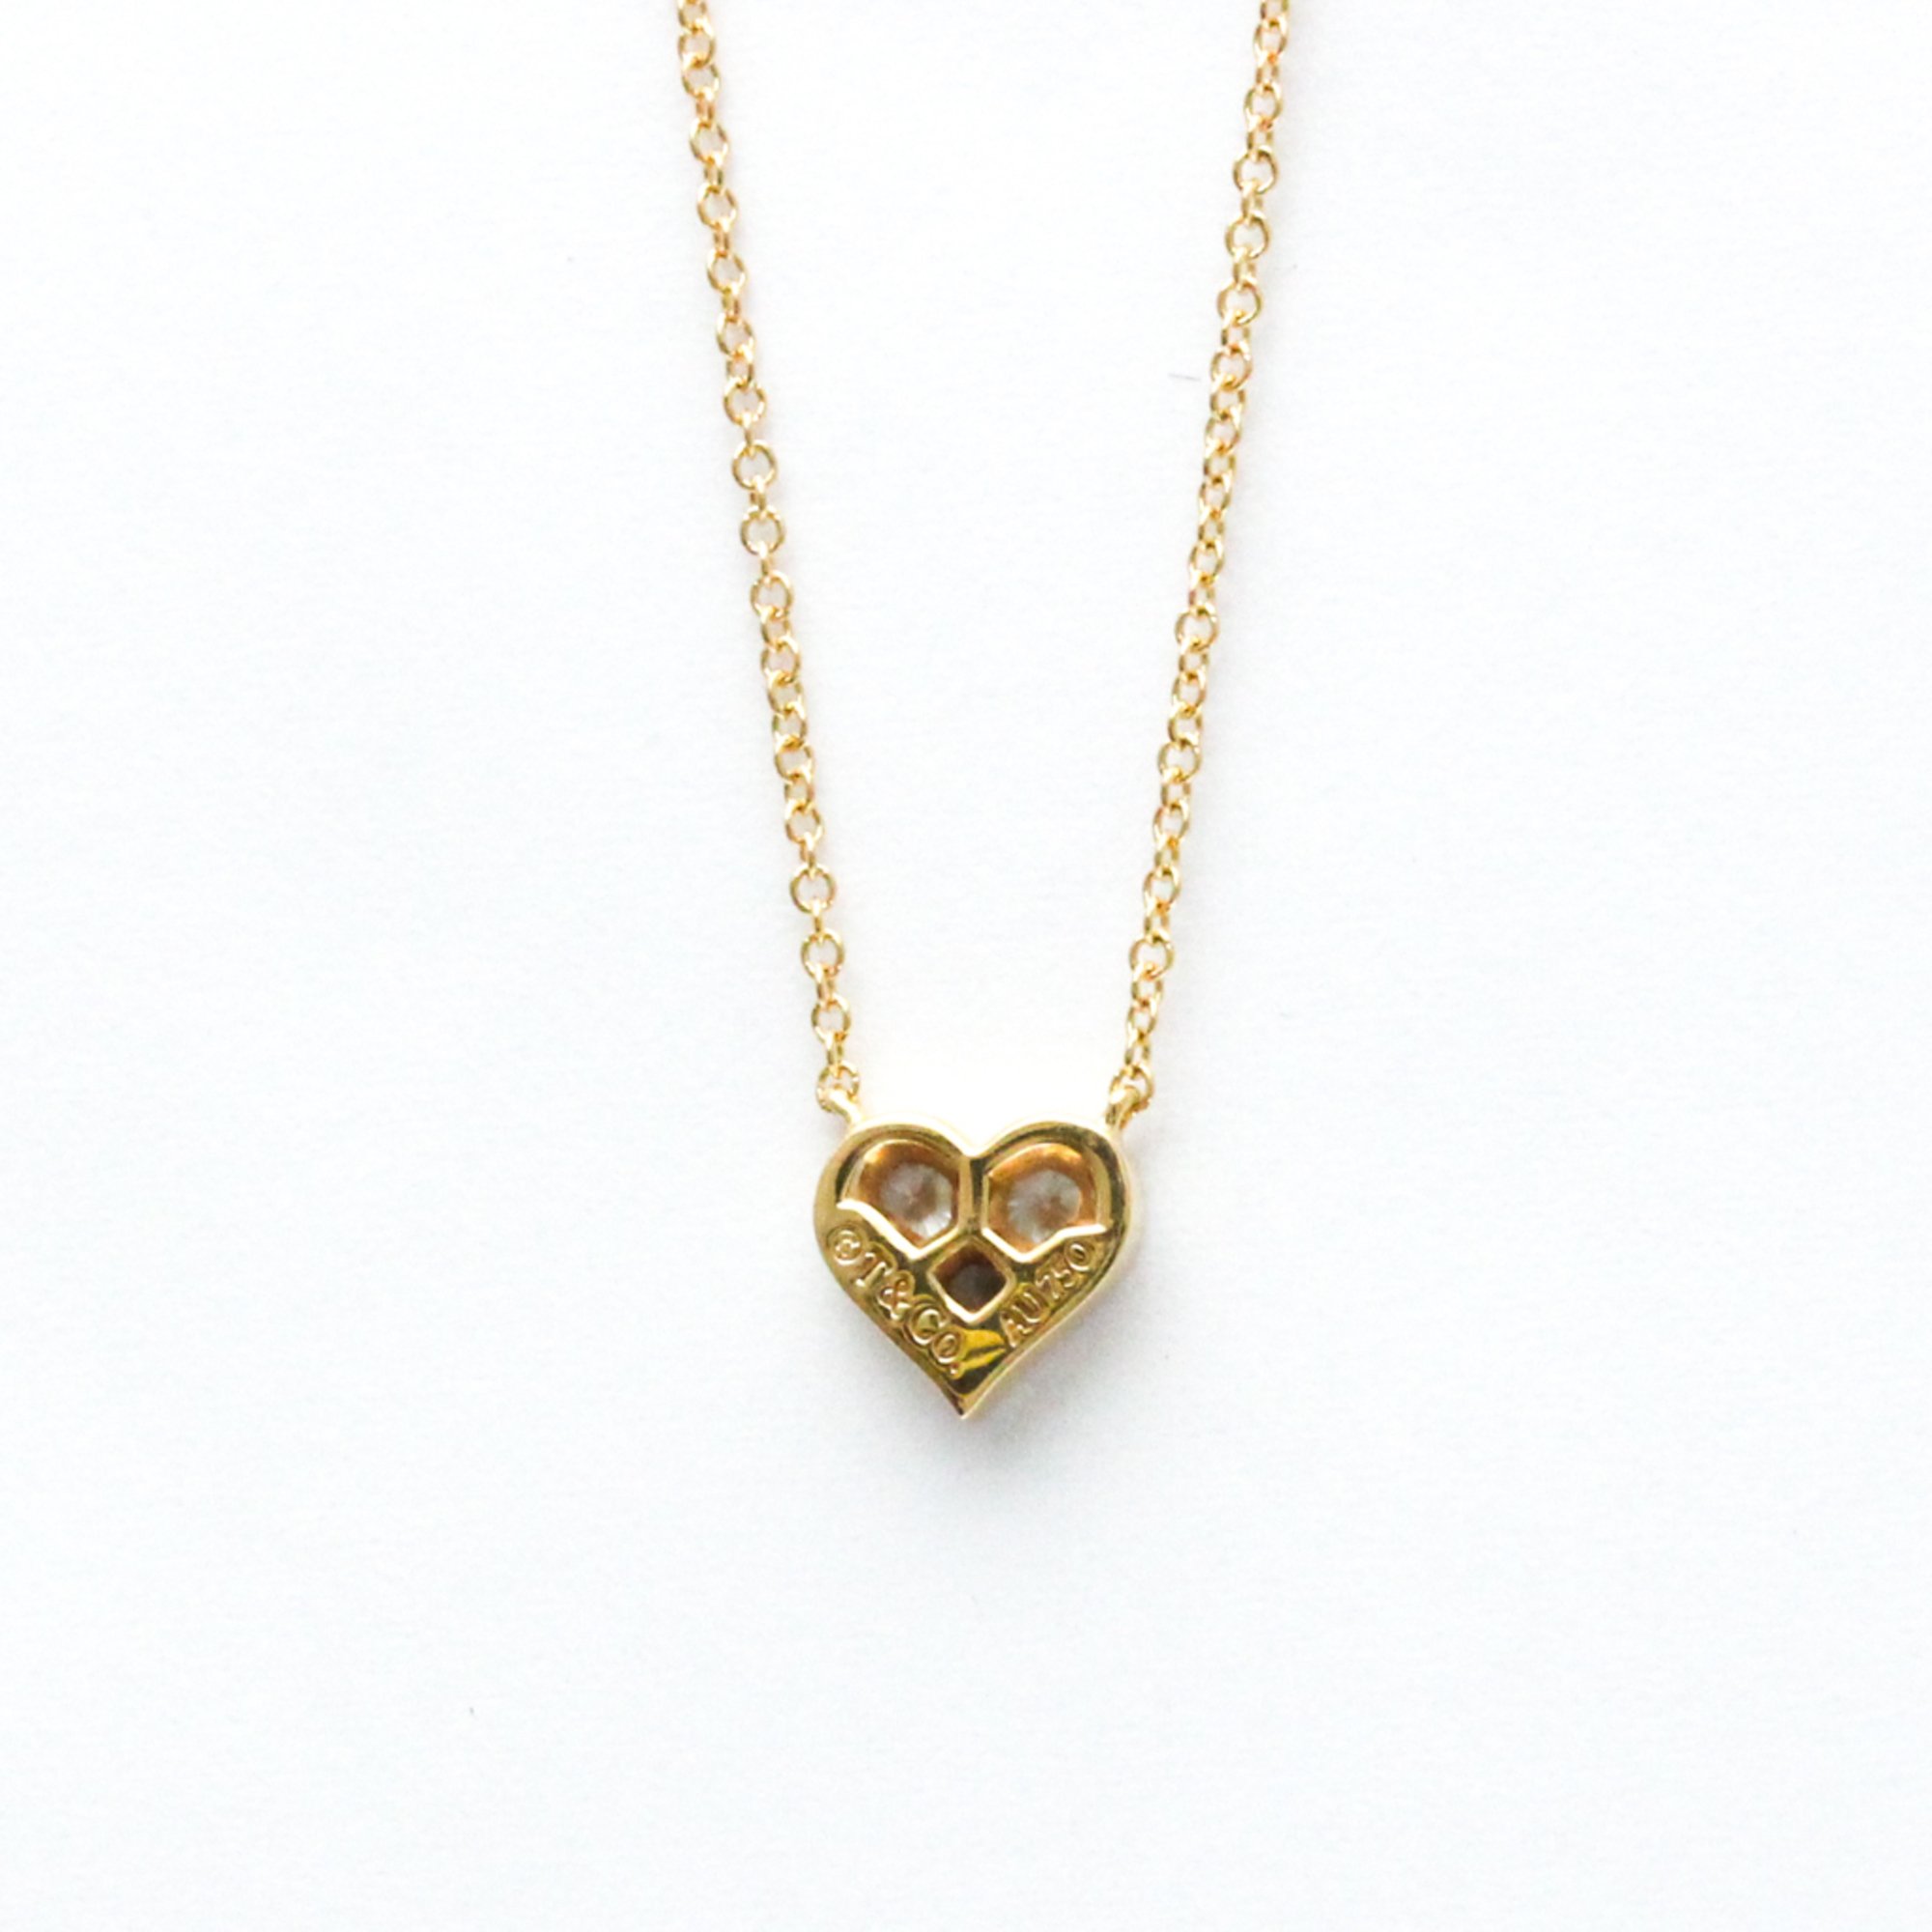 Tiffany Sentimental Heart Necklace Pink Gold (18K) Diamond Men,Women Fashion Pendant Necklace (Pink Gold)